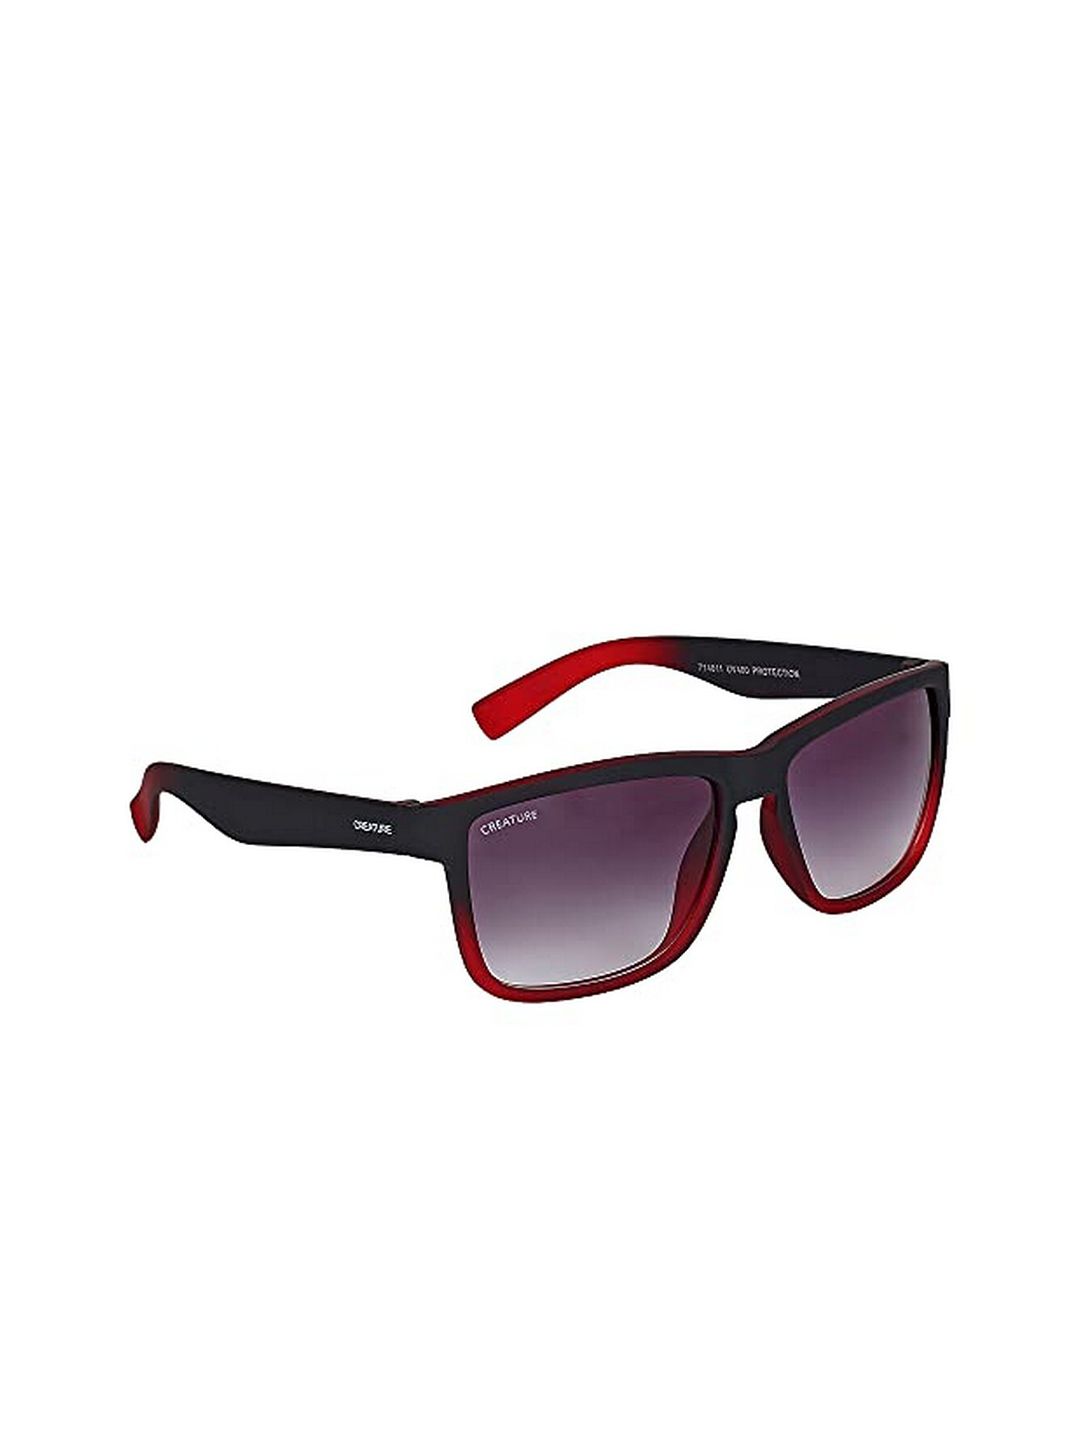 Creature Unisex Purple Lens & Red Wayfarer Sunglasses with UV Protected Lens SUN-062 Price in India